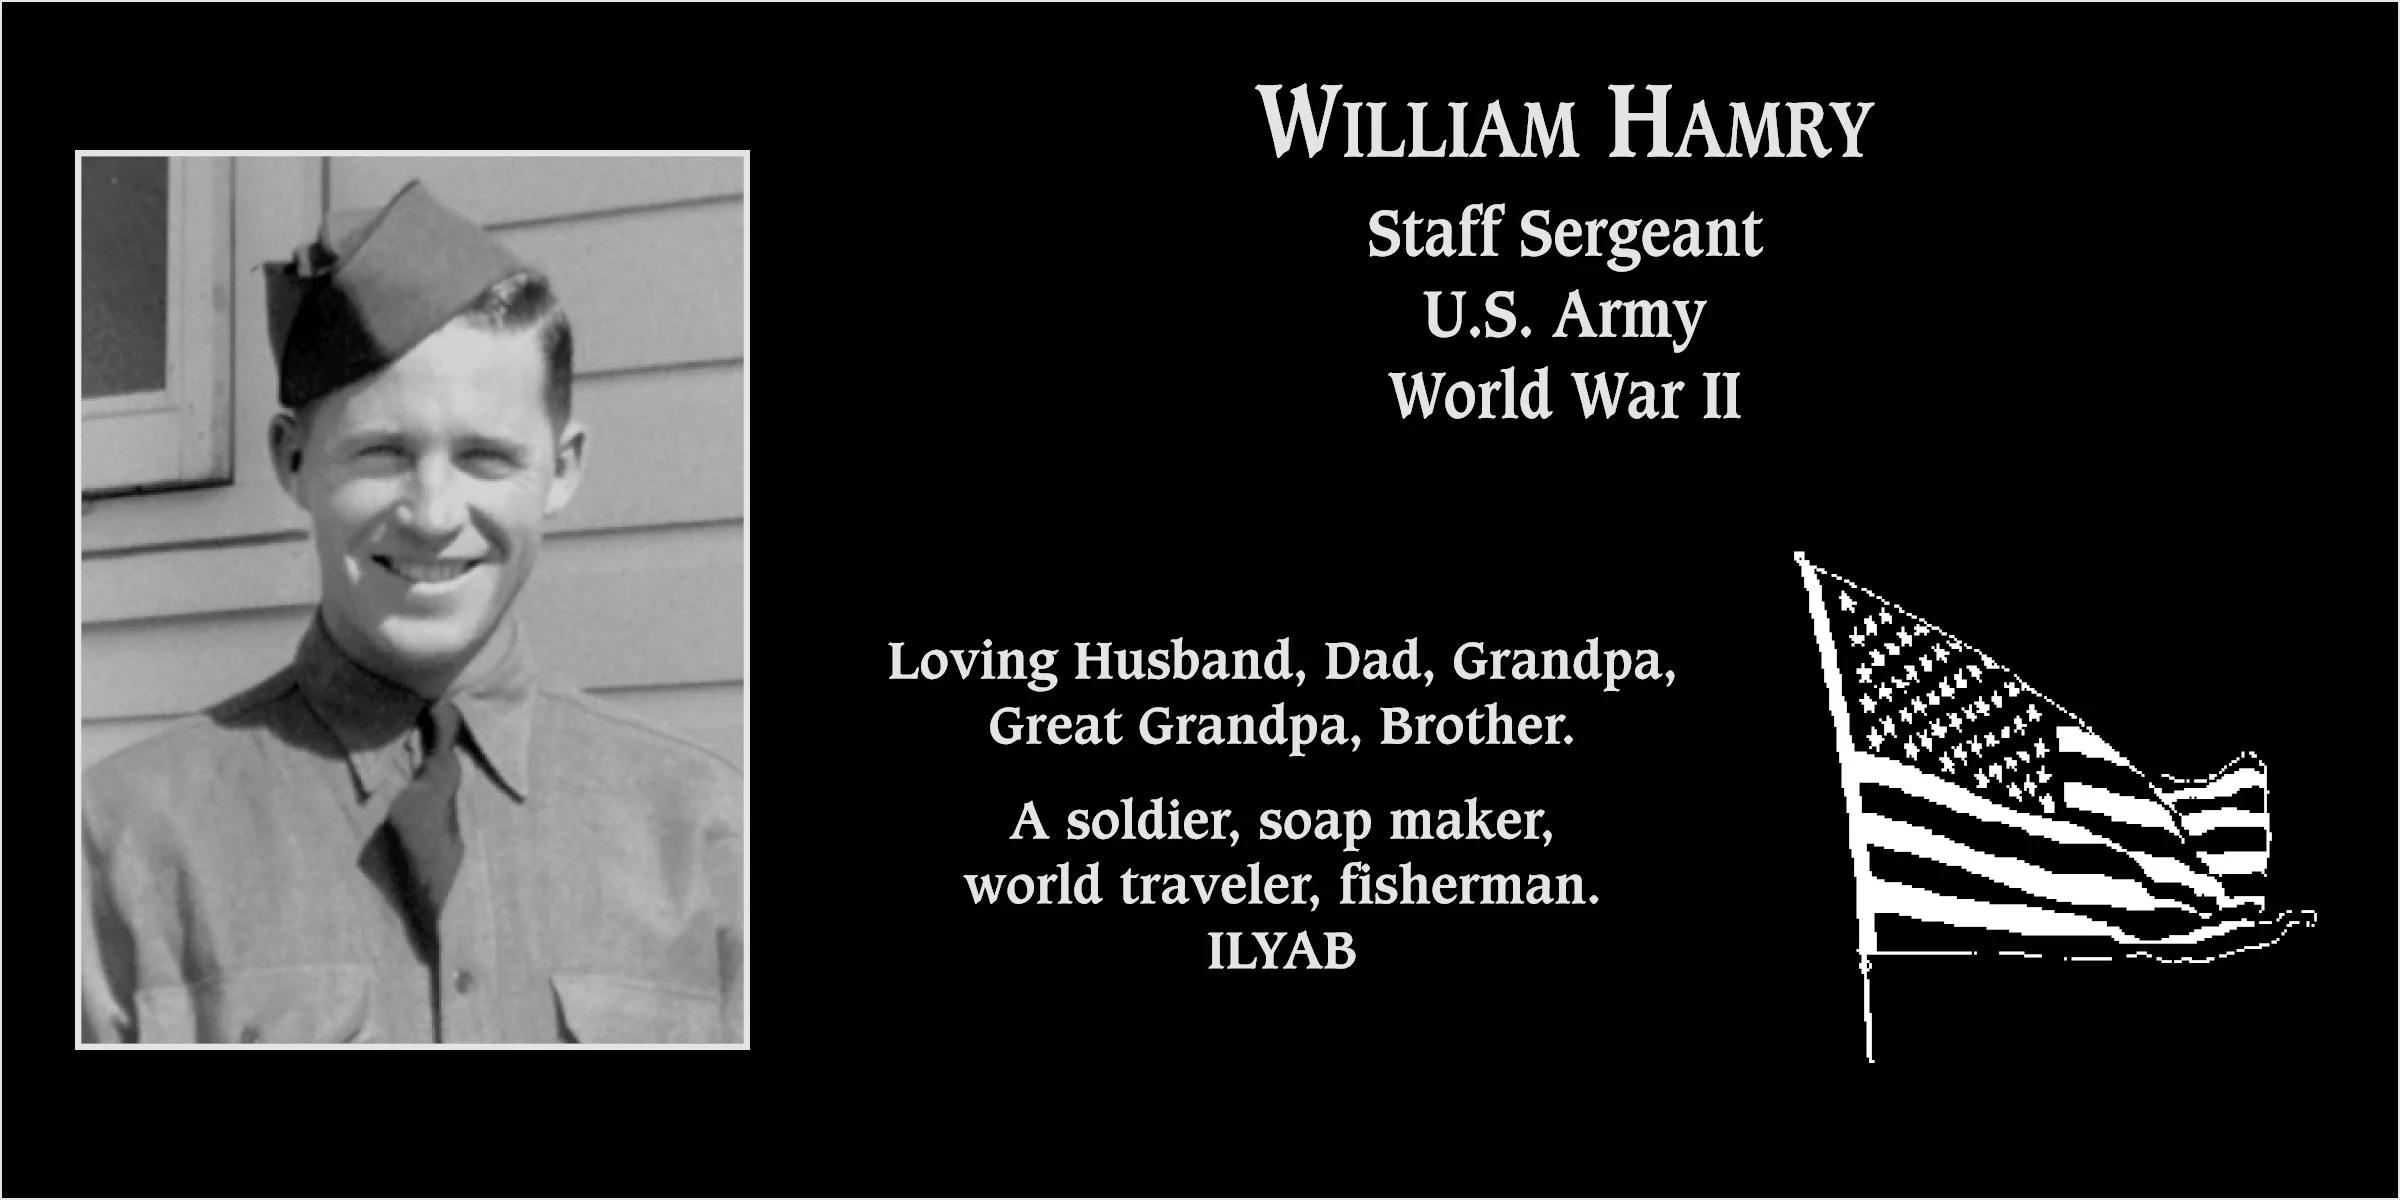 William Harmy